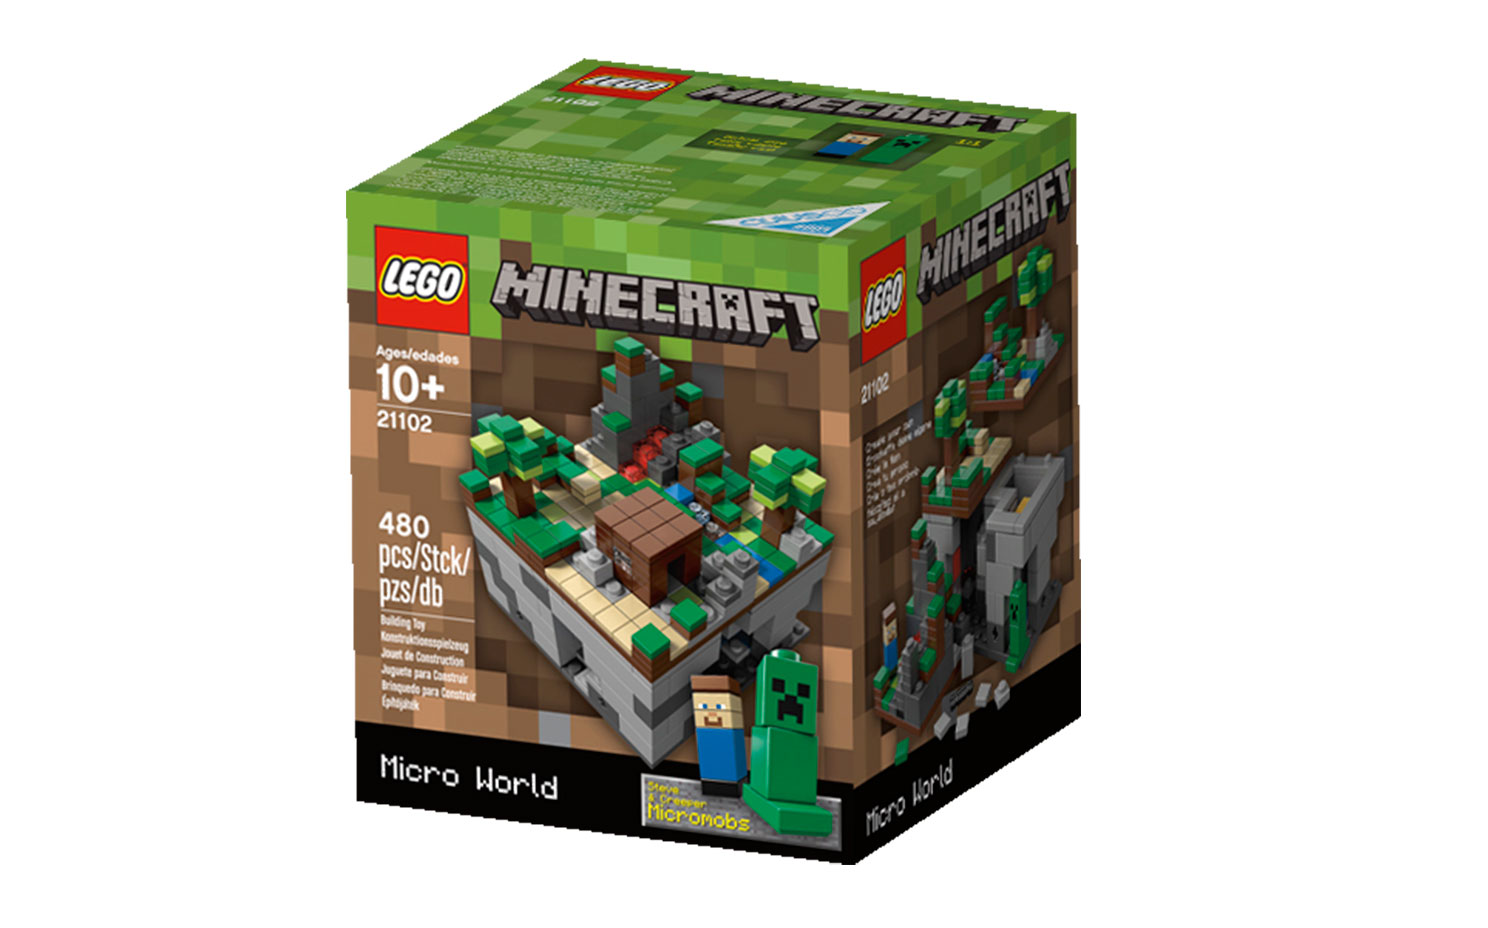 Flad naturpark Brøl Micro World - The Forest 21102 - LEGO® Minecraft™ Sets - LEGO.com for kids